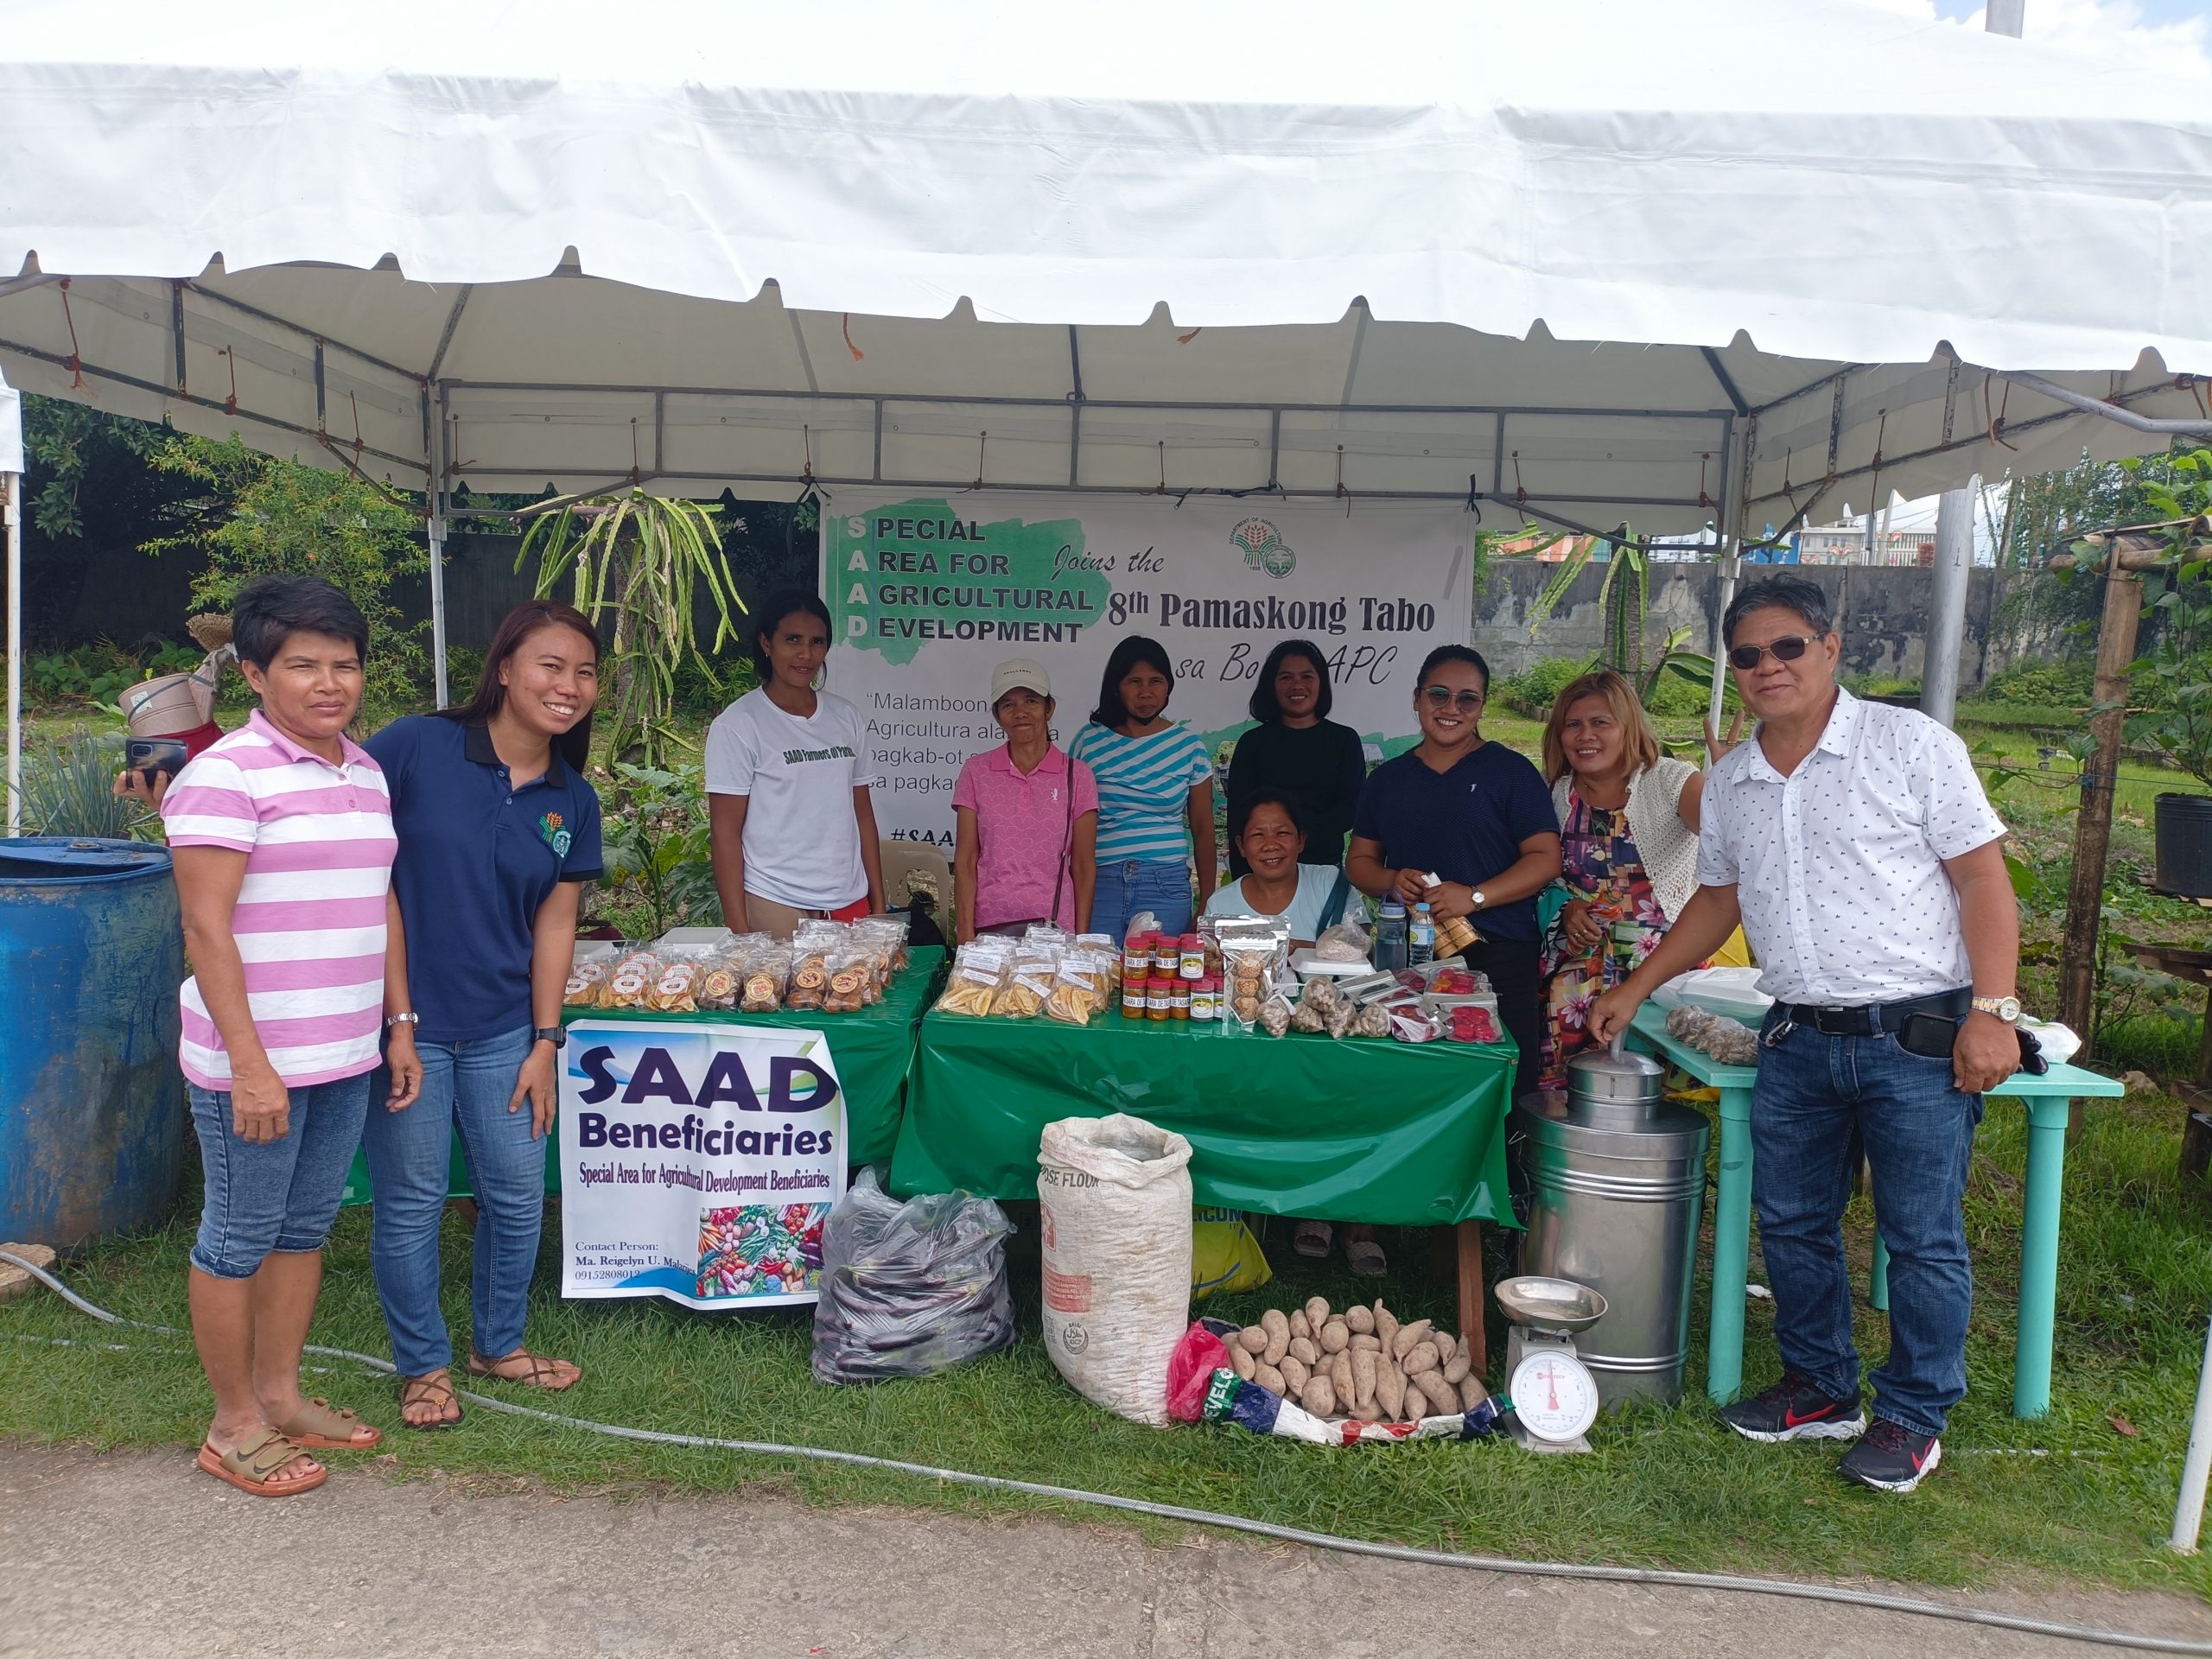 Boholano farmers join Bohol’s 8th Pamaskong Tabod